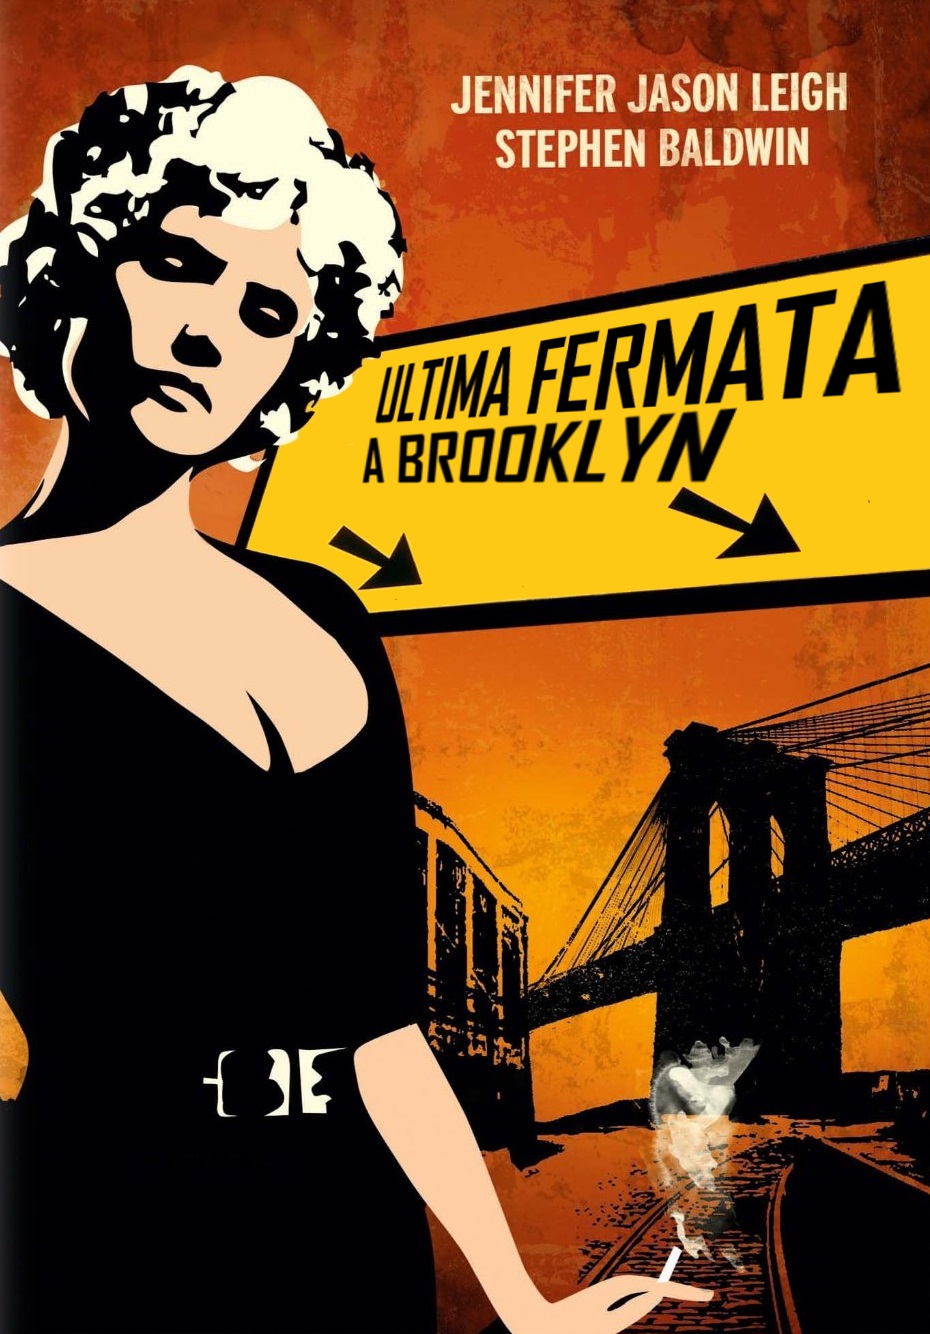 Ultima fermata Brooklyn [HD] (1989)